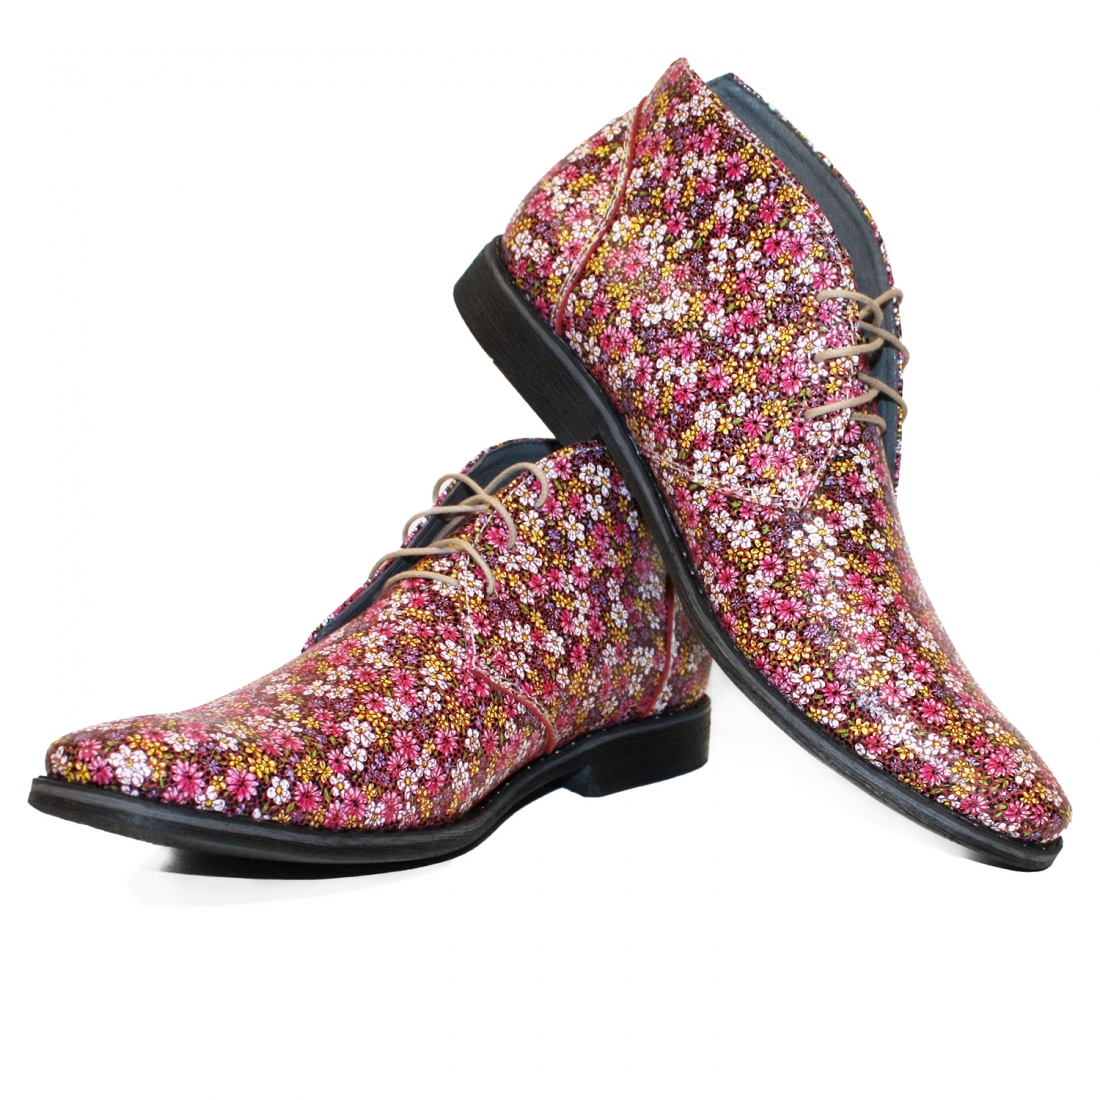 Modello Floretto - Chukka Botas - Handmade Colorful Italian Leather Shoes